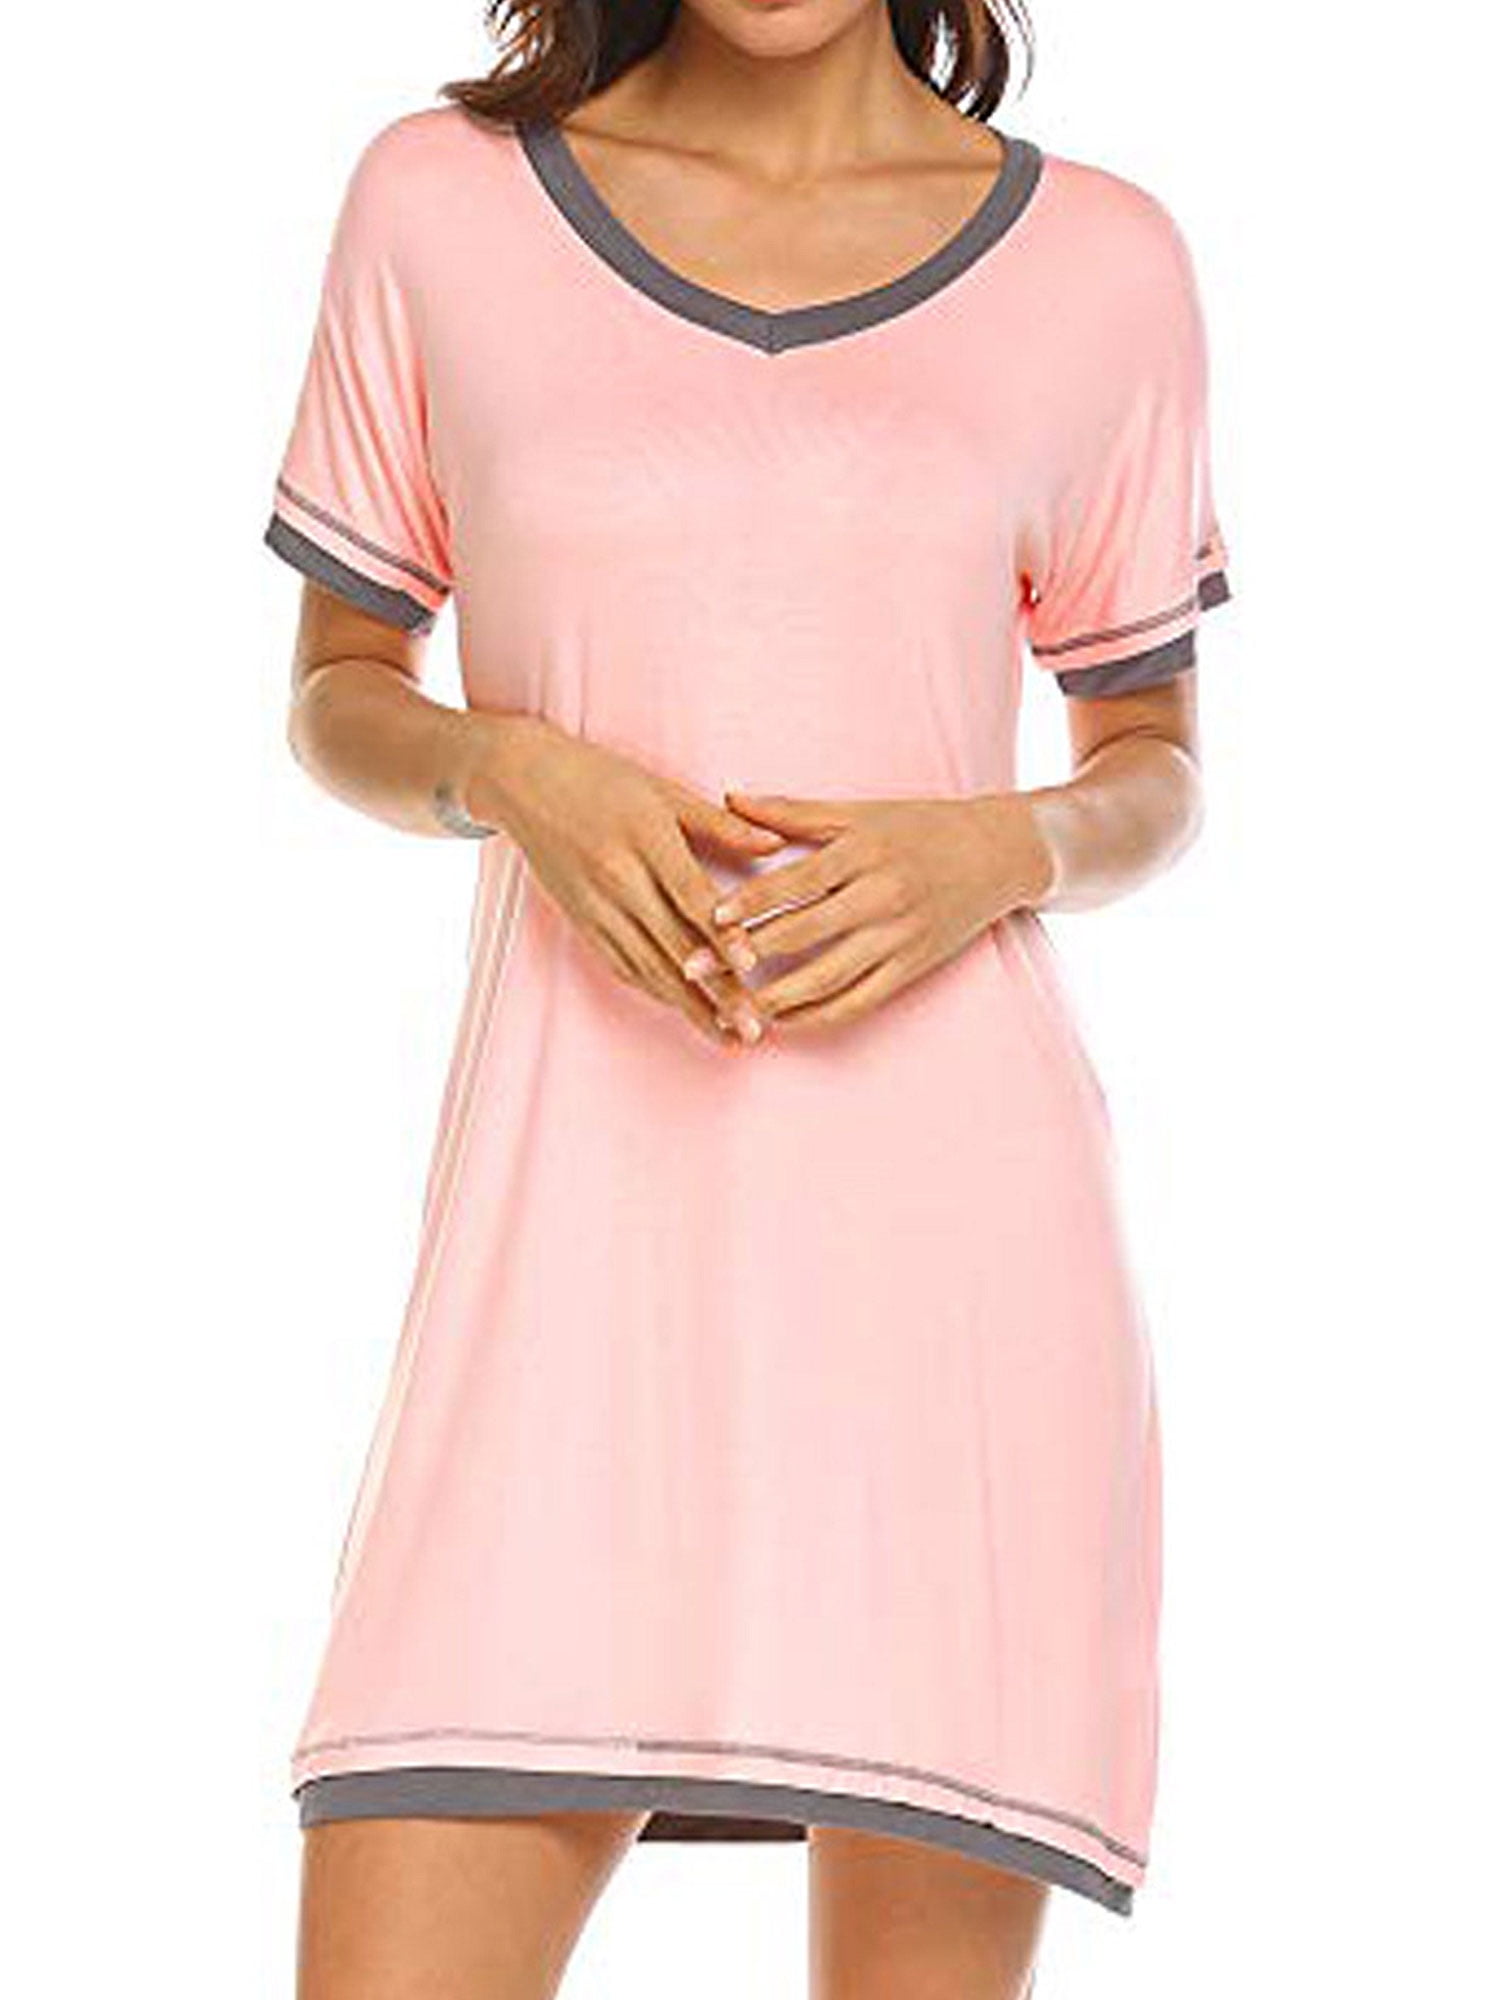 Sleepwear for Women,Womens Nightgown Cotton Sleep Shirt Printed Short Sleeve O Neck Sleep Tee Dresses Nightshirt S-XXL 